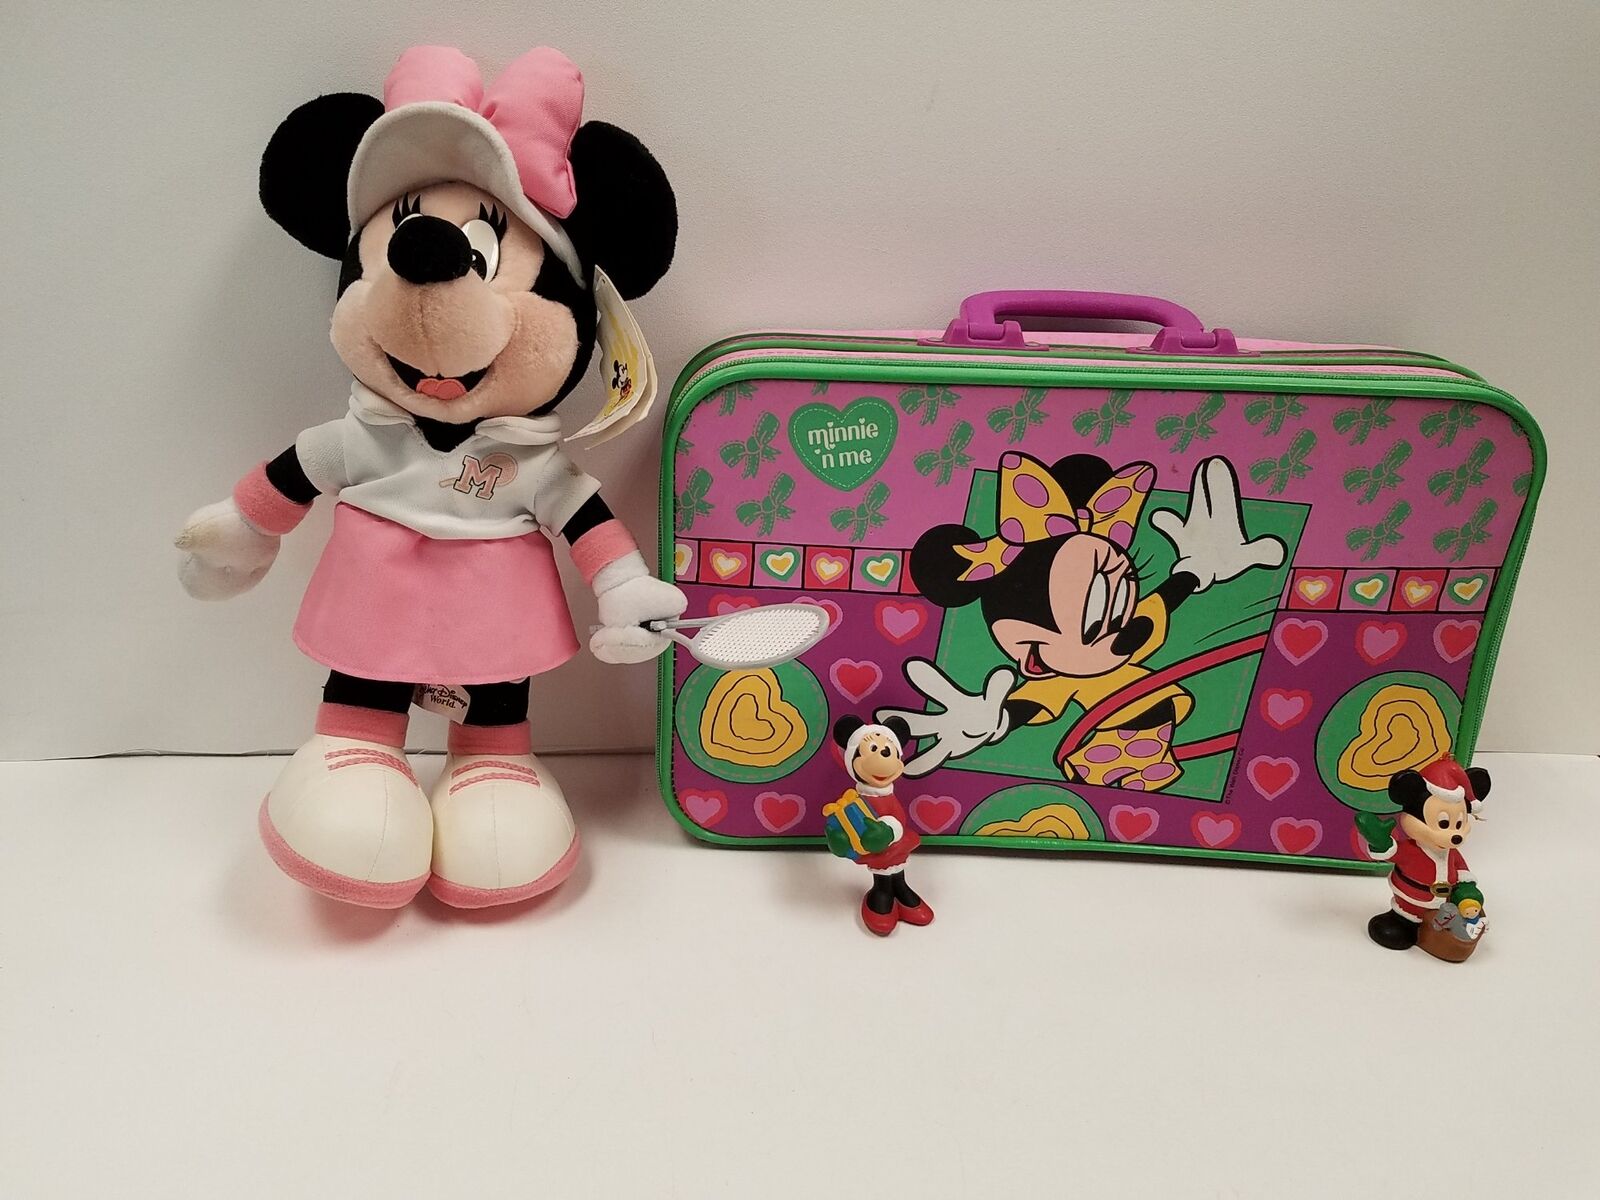 Vintage Disney Minnie Mouse Suitcase, Tennis Minnie Plush, Holiday Ornaments